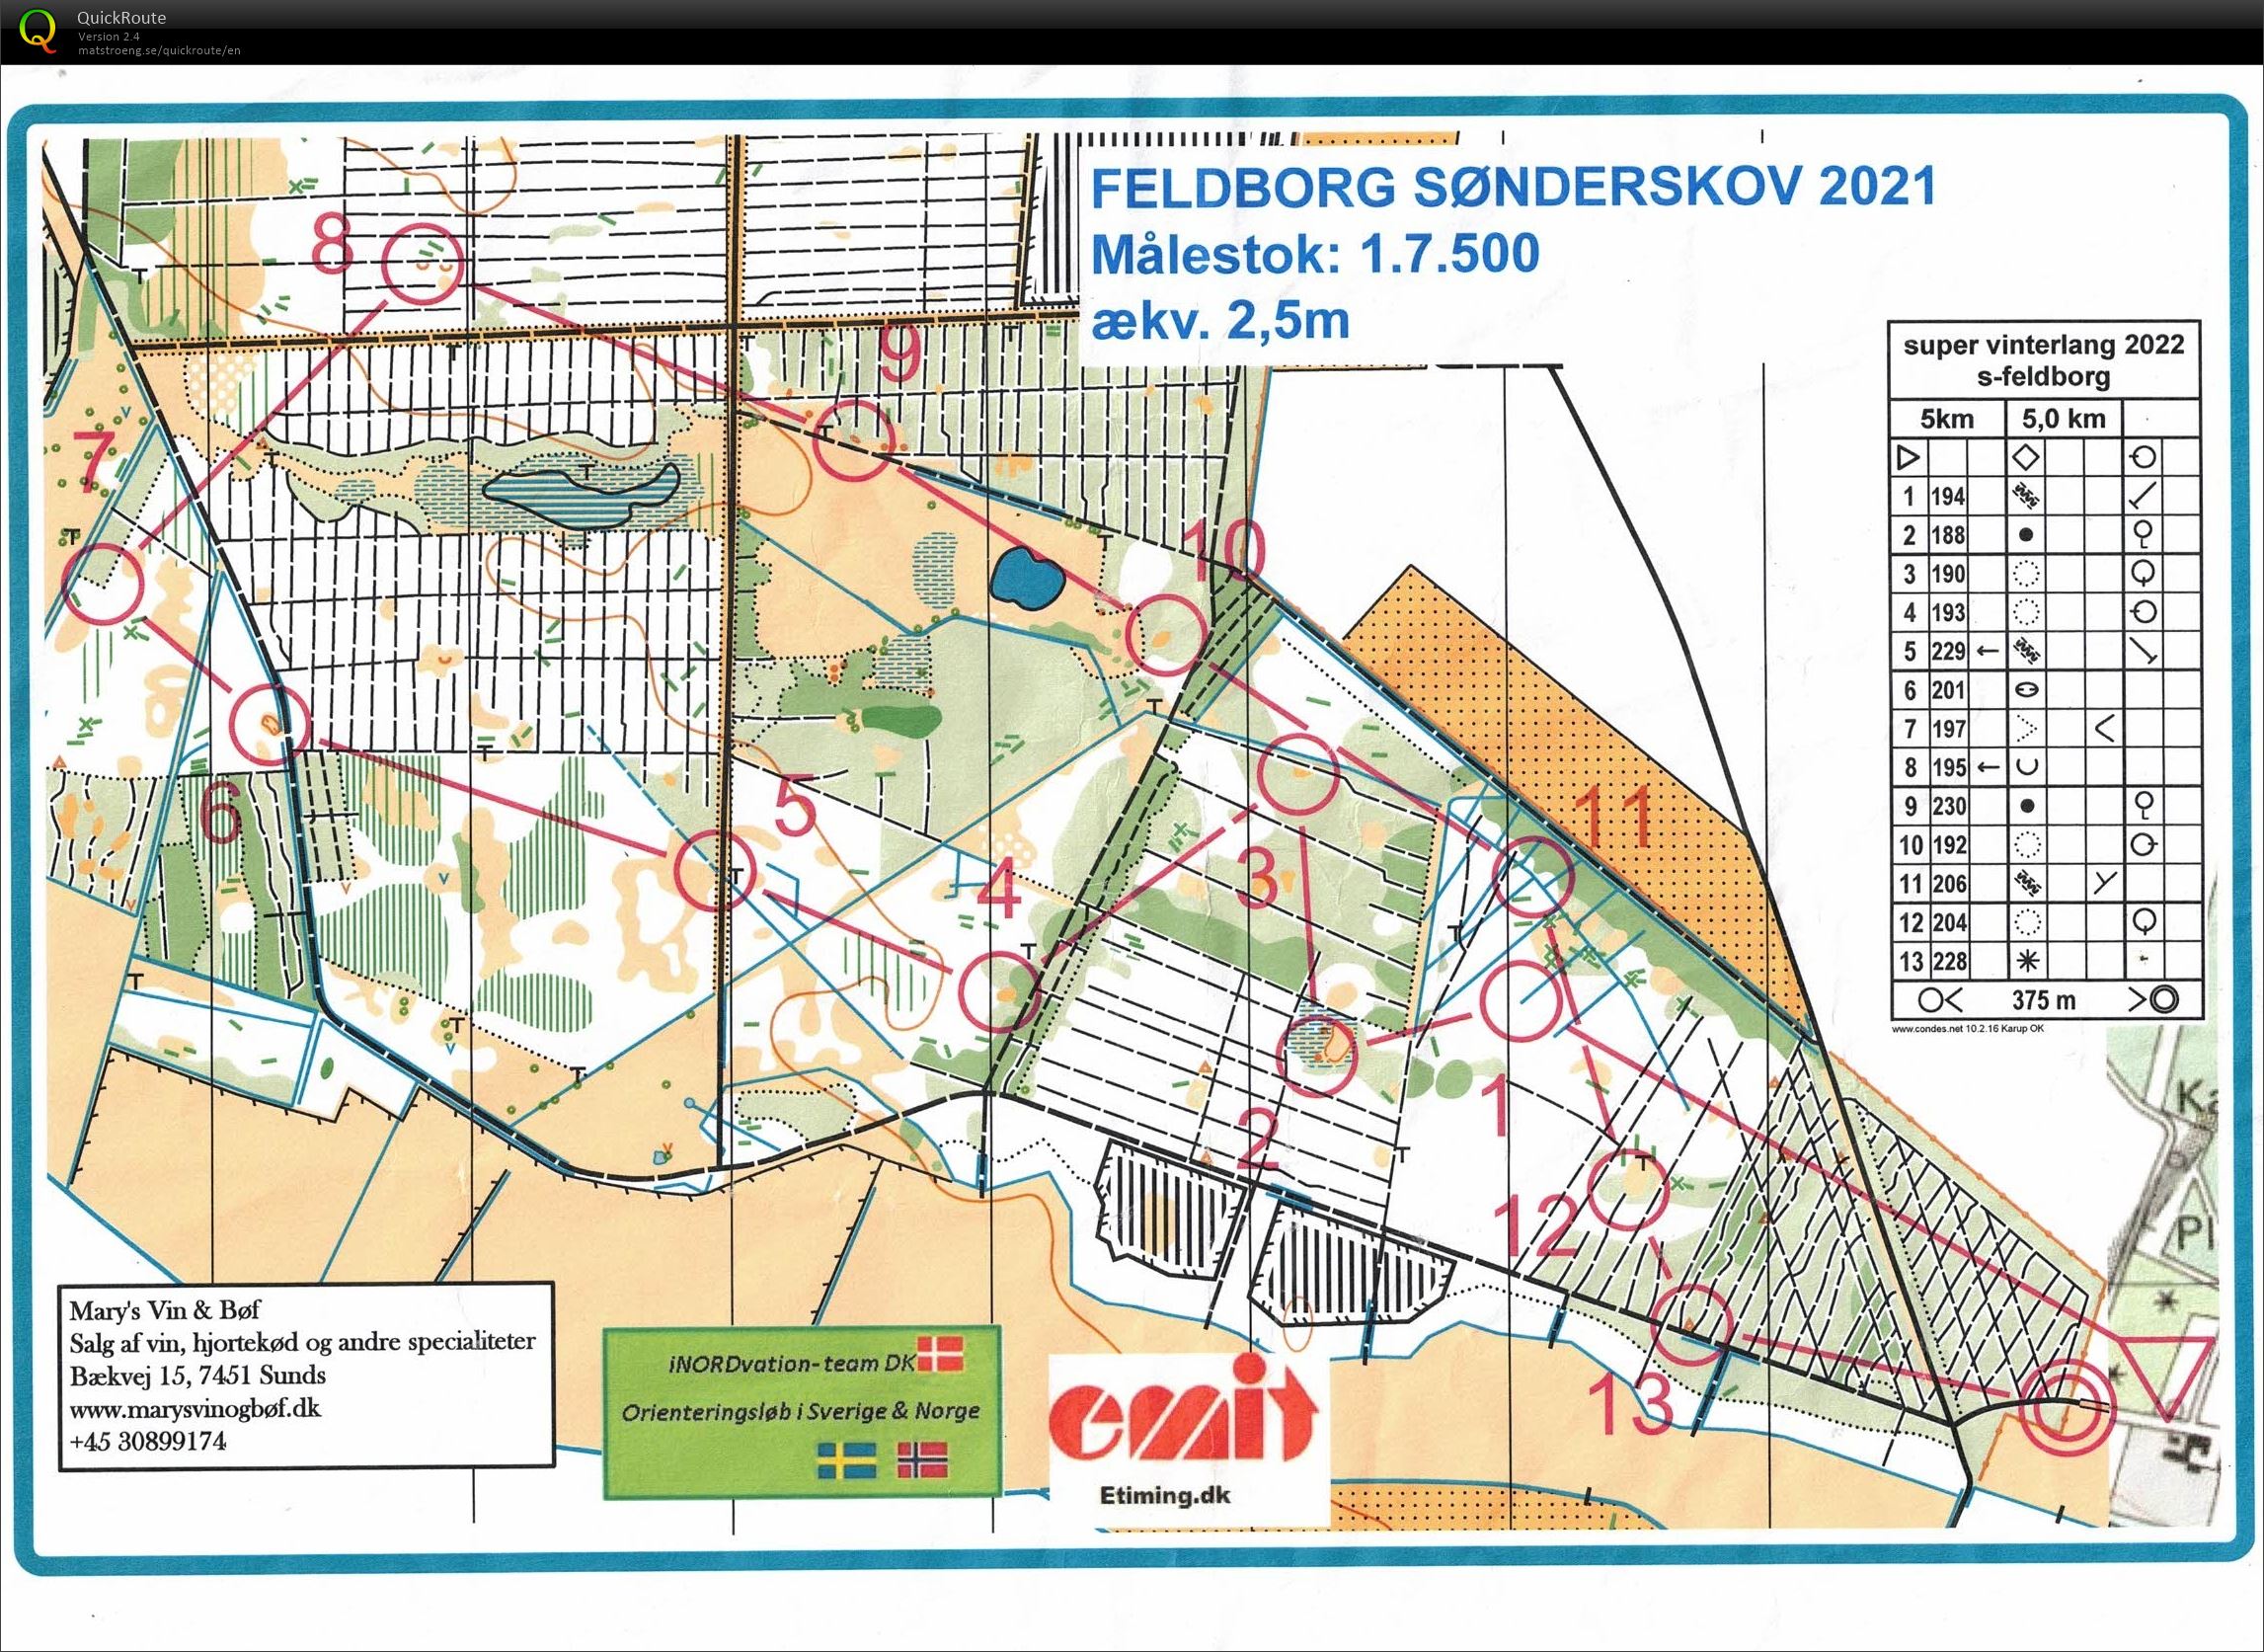 Feldborg Sønderskov, Super Langdistance 2, Bane 5 km, Pia Gade, 020122 (02/01/2022)